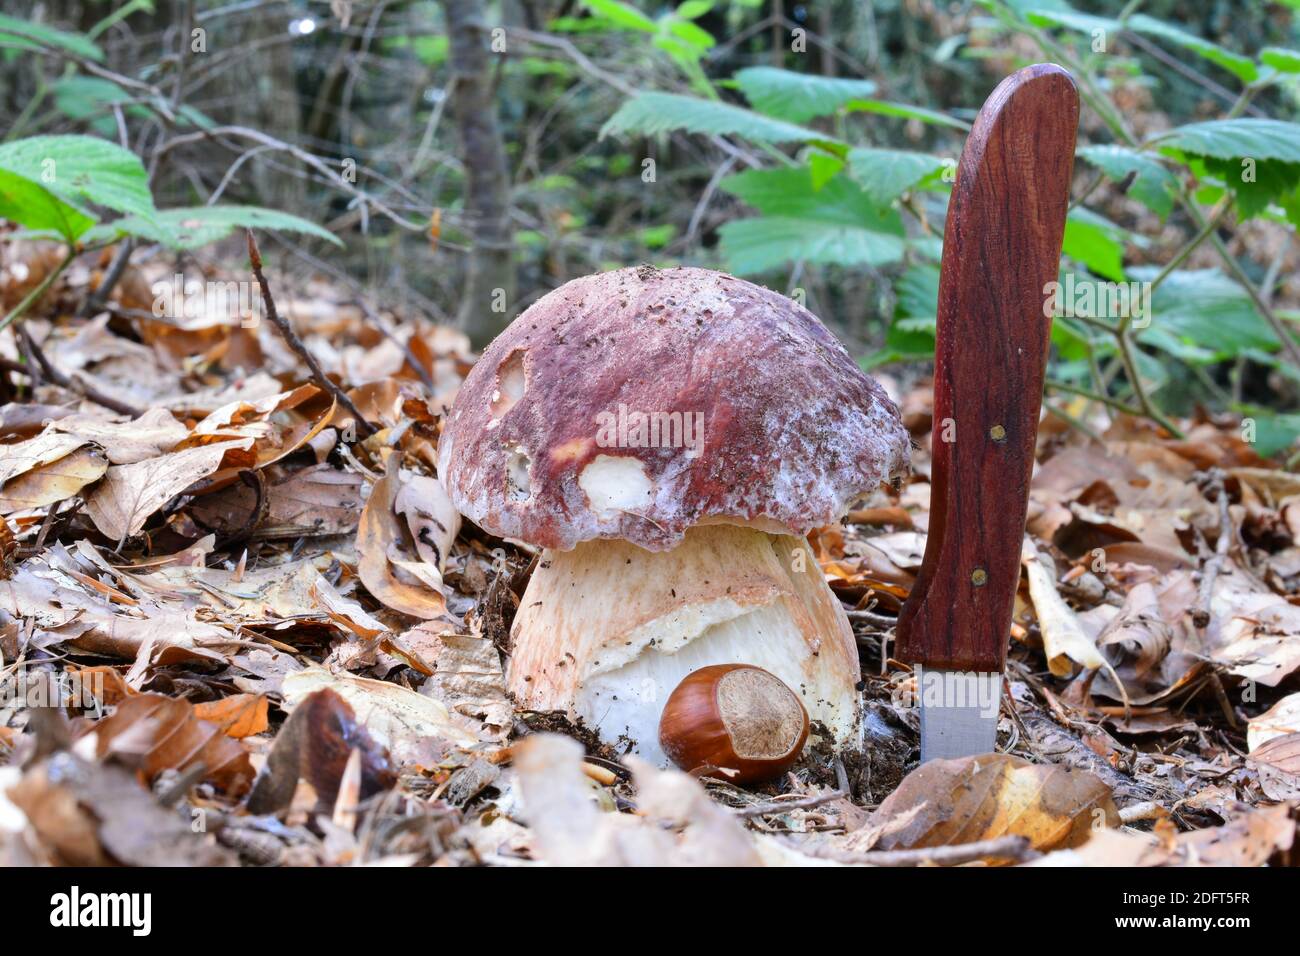 Nice specimen of Boletus pinophilus or Pine bolete, edible, delicious wild mushroom, size compared with hazelnut and knife, horizontal orientation, na Stock Photo